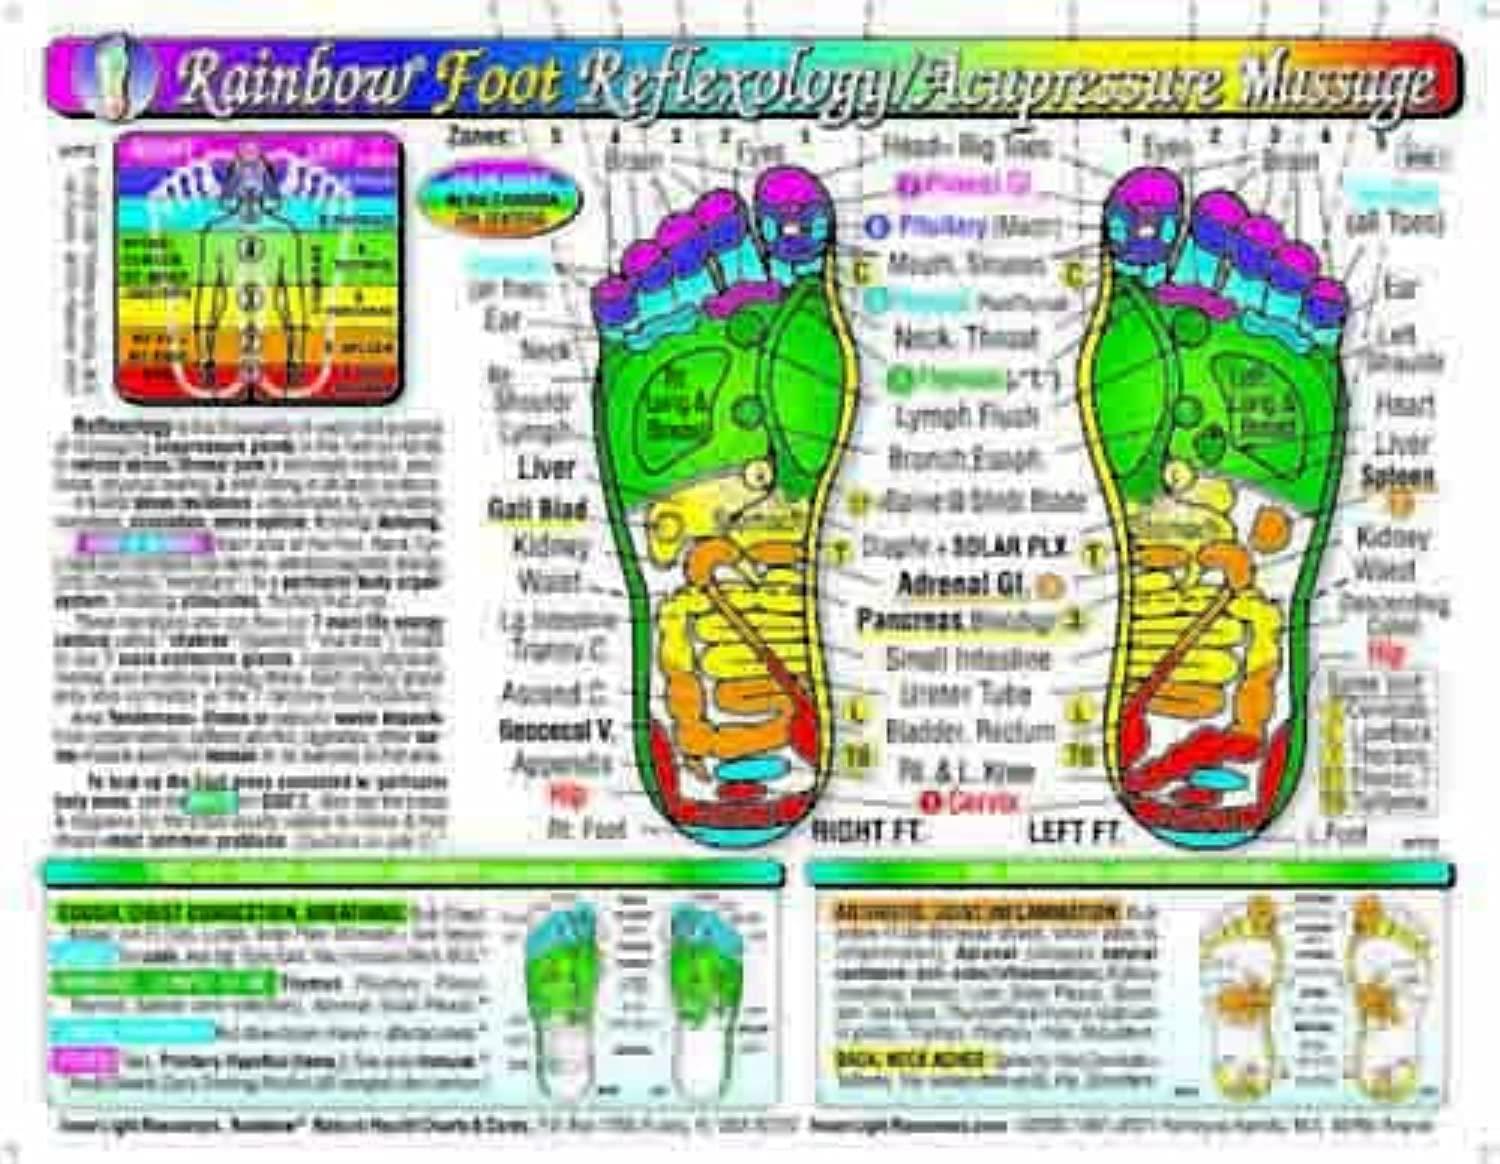 rainbow foot reflexology acupressure massage chart  yshkeyna hamilla, jan zupcsics, yshheyna hamilla ma